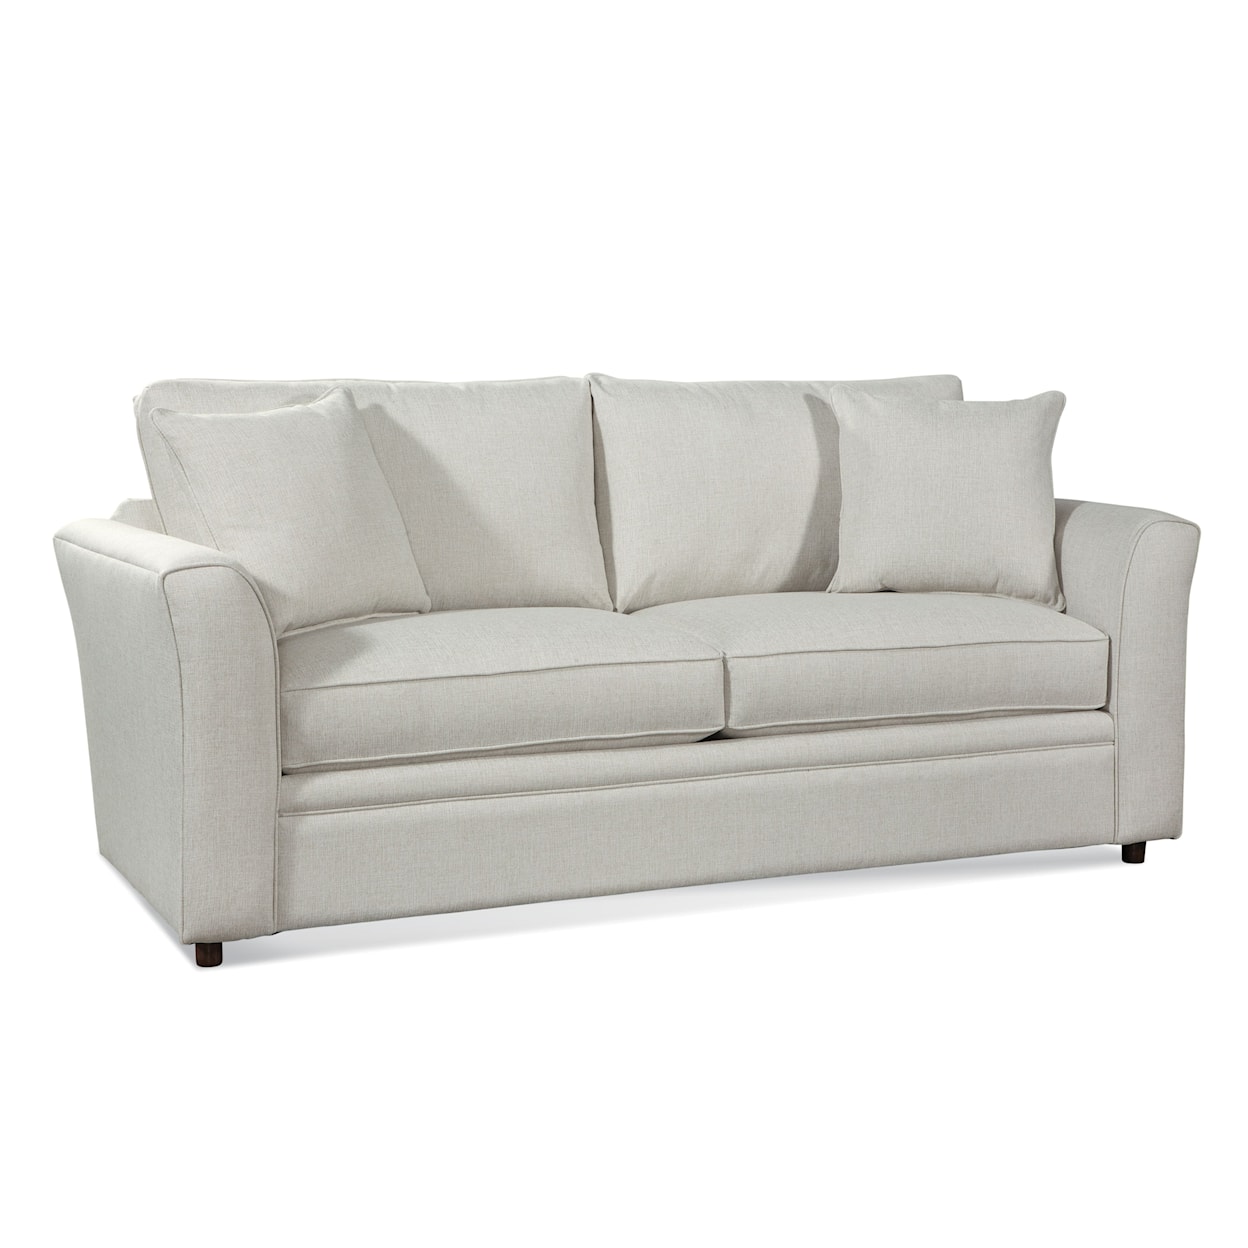 Braxton Culler Northfield 2 Cushion Upholstered Sleeper Sofa